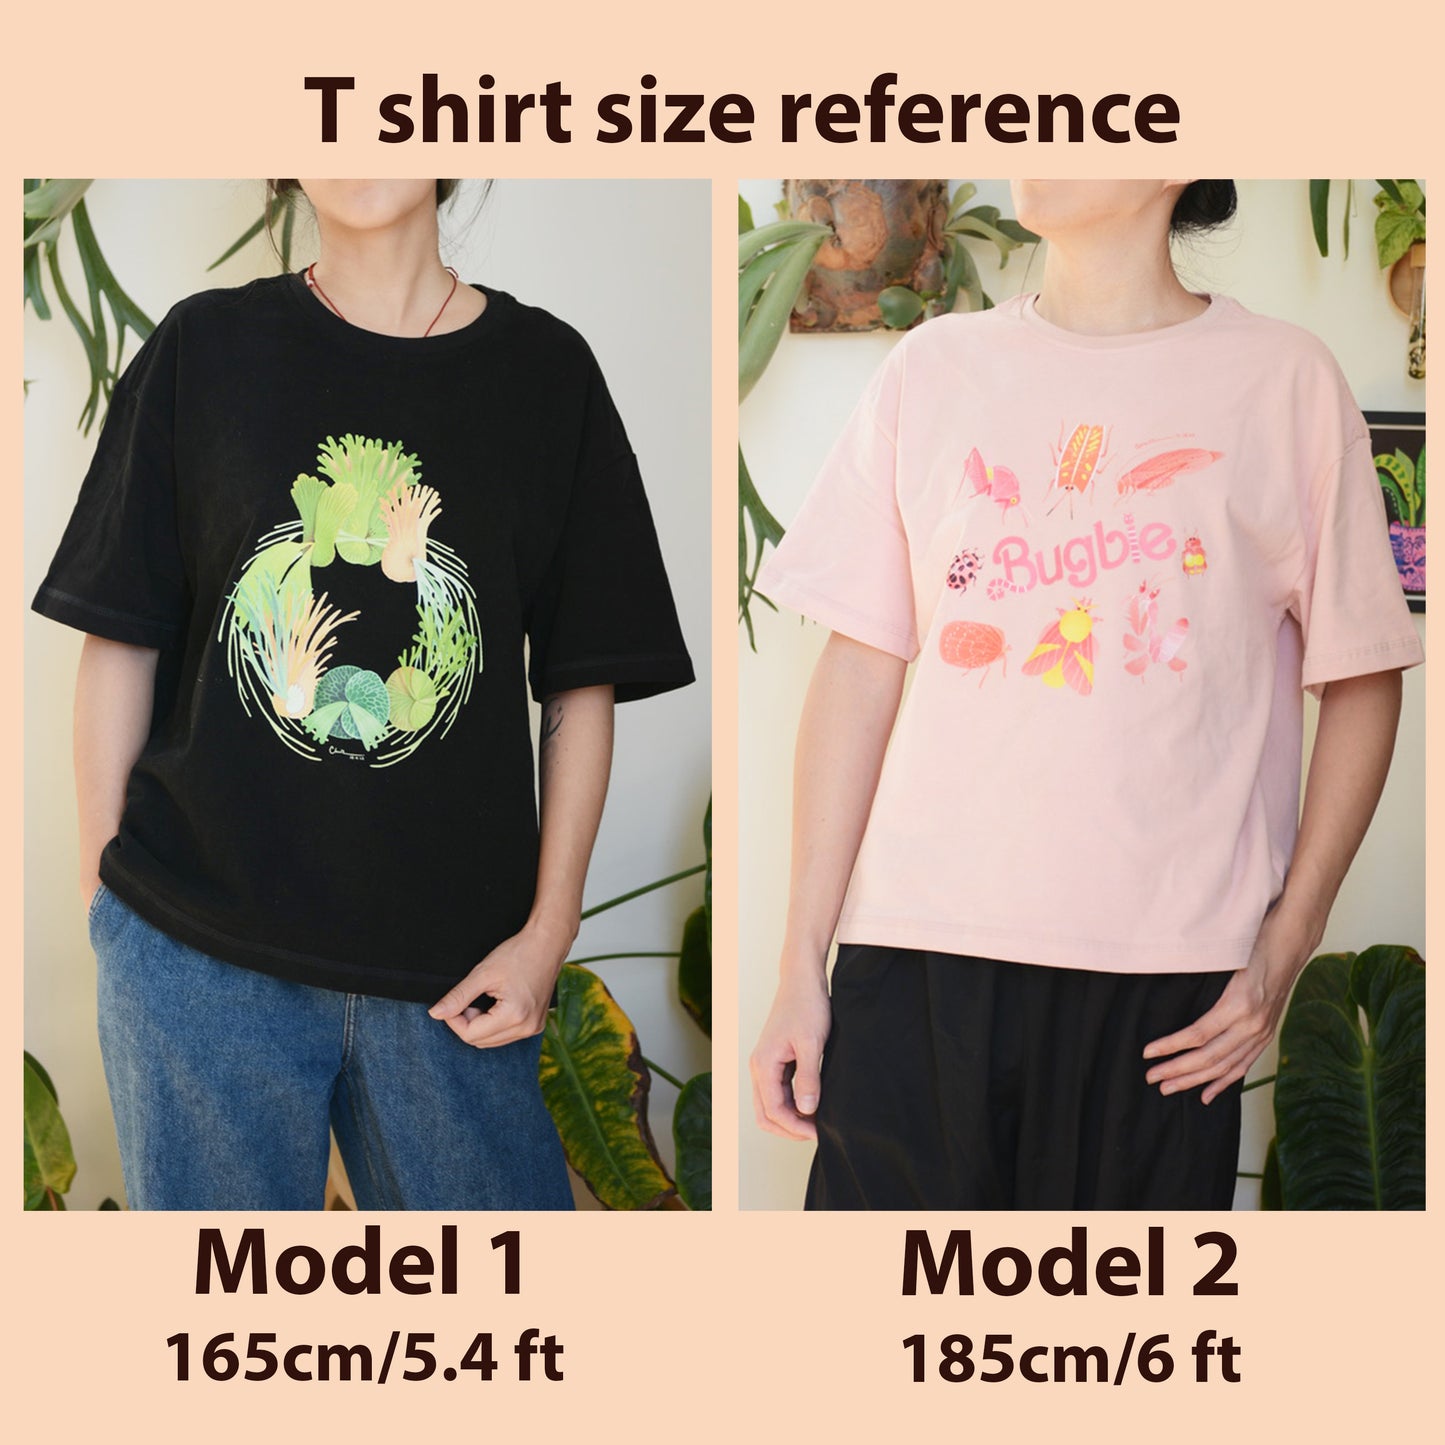 Isopod - 300g cotton gender neutral high quality shirt - multiple sizes